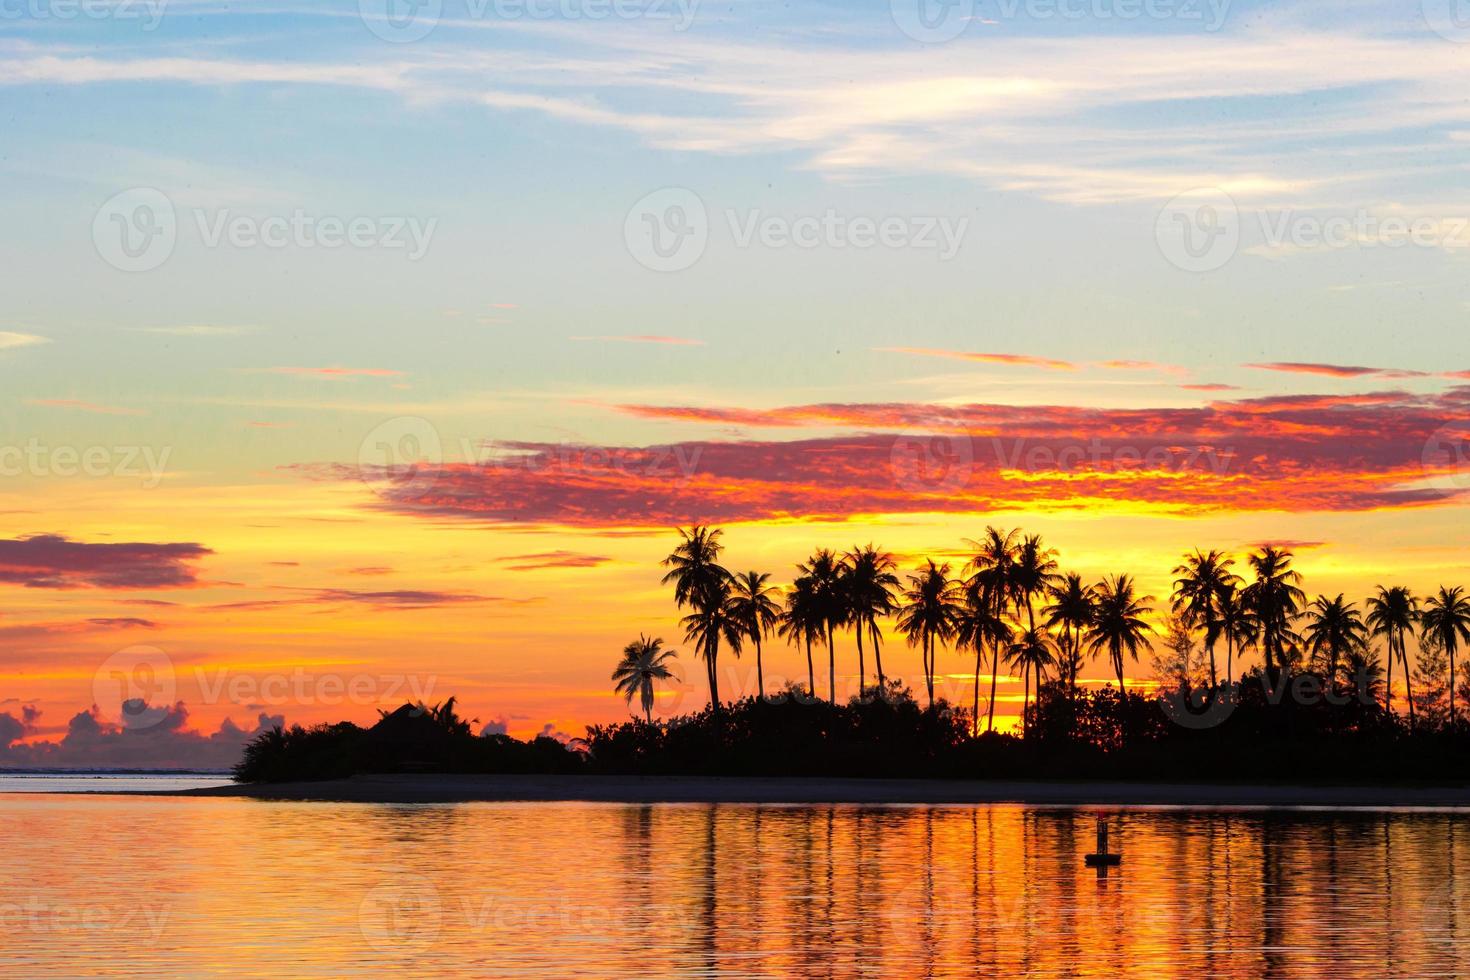 silhuetas escuras de palmeiras e incrível céu nublado no pôr do sol na ilha tropical no Oceano Índico foto